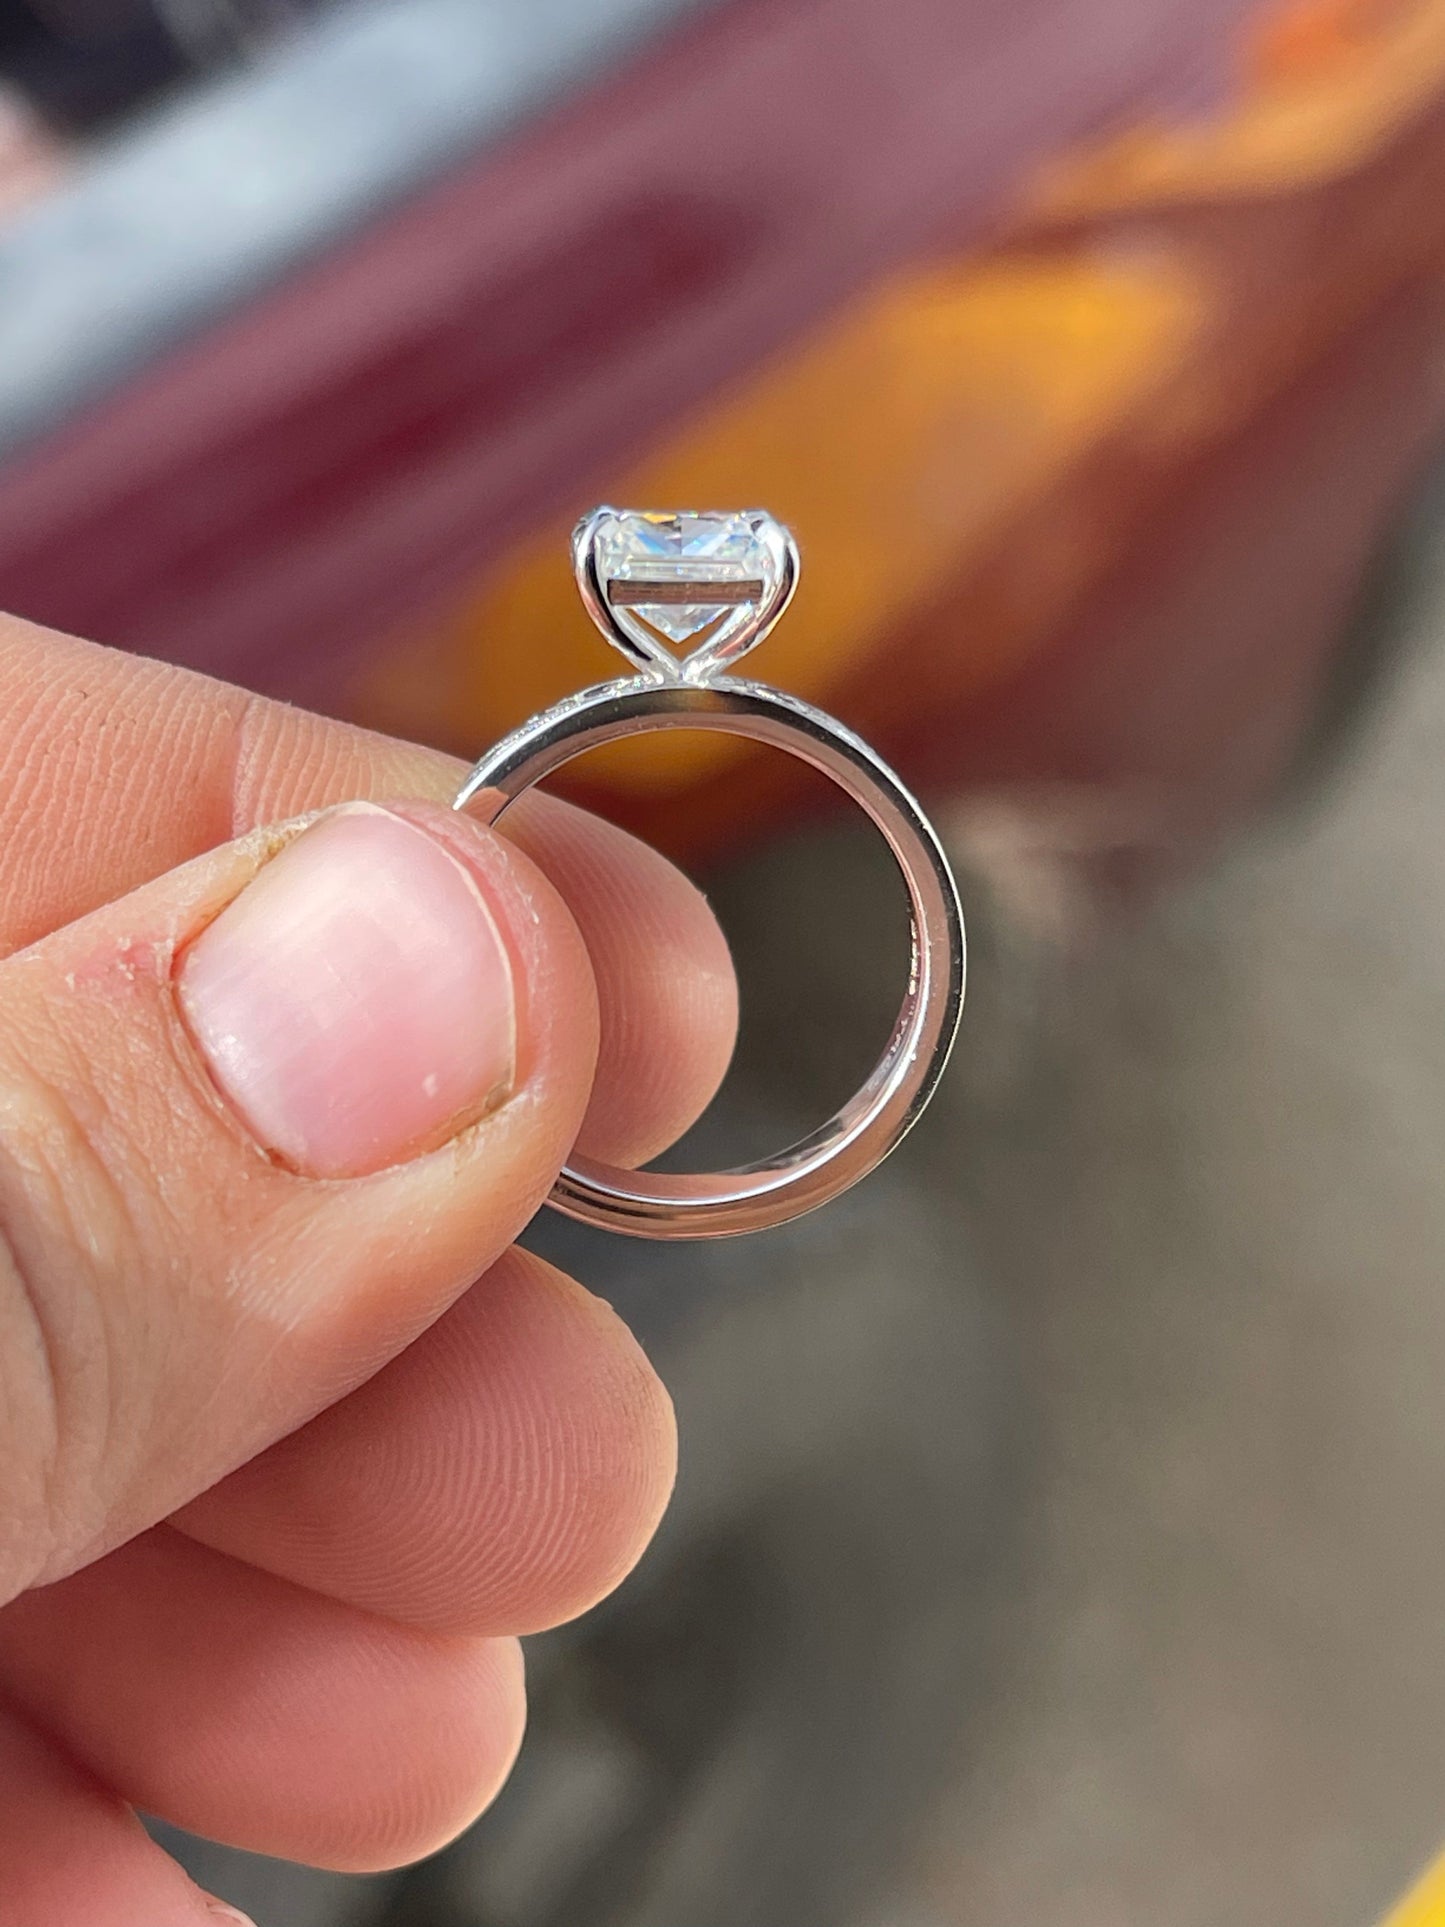 Priscilla 7US 10K White Gold Engagement Ring